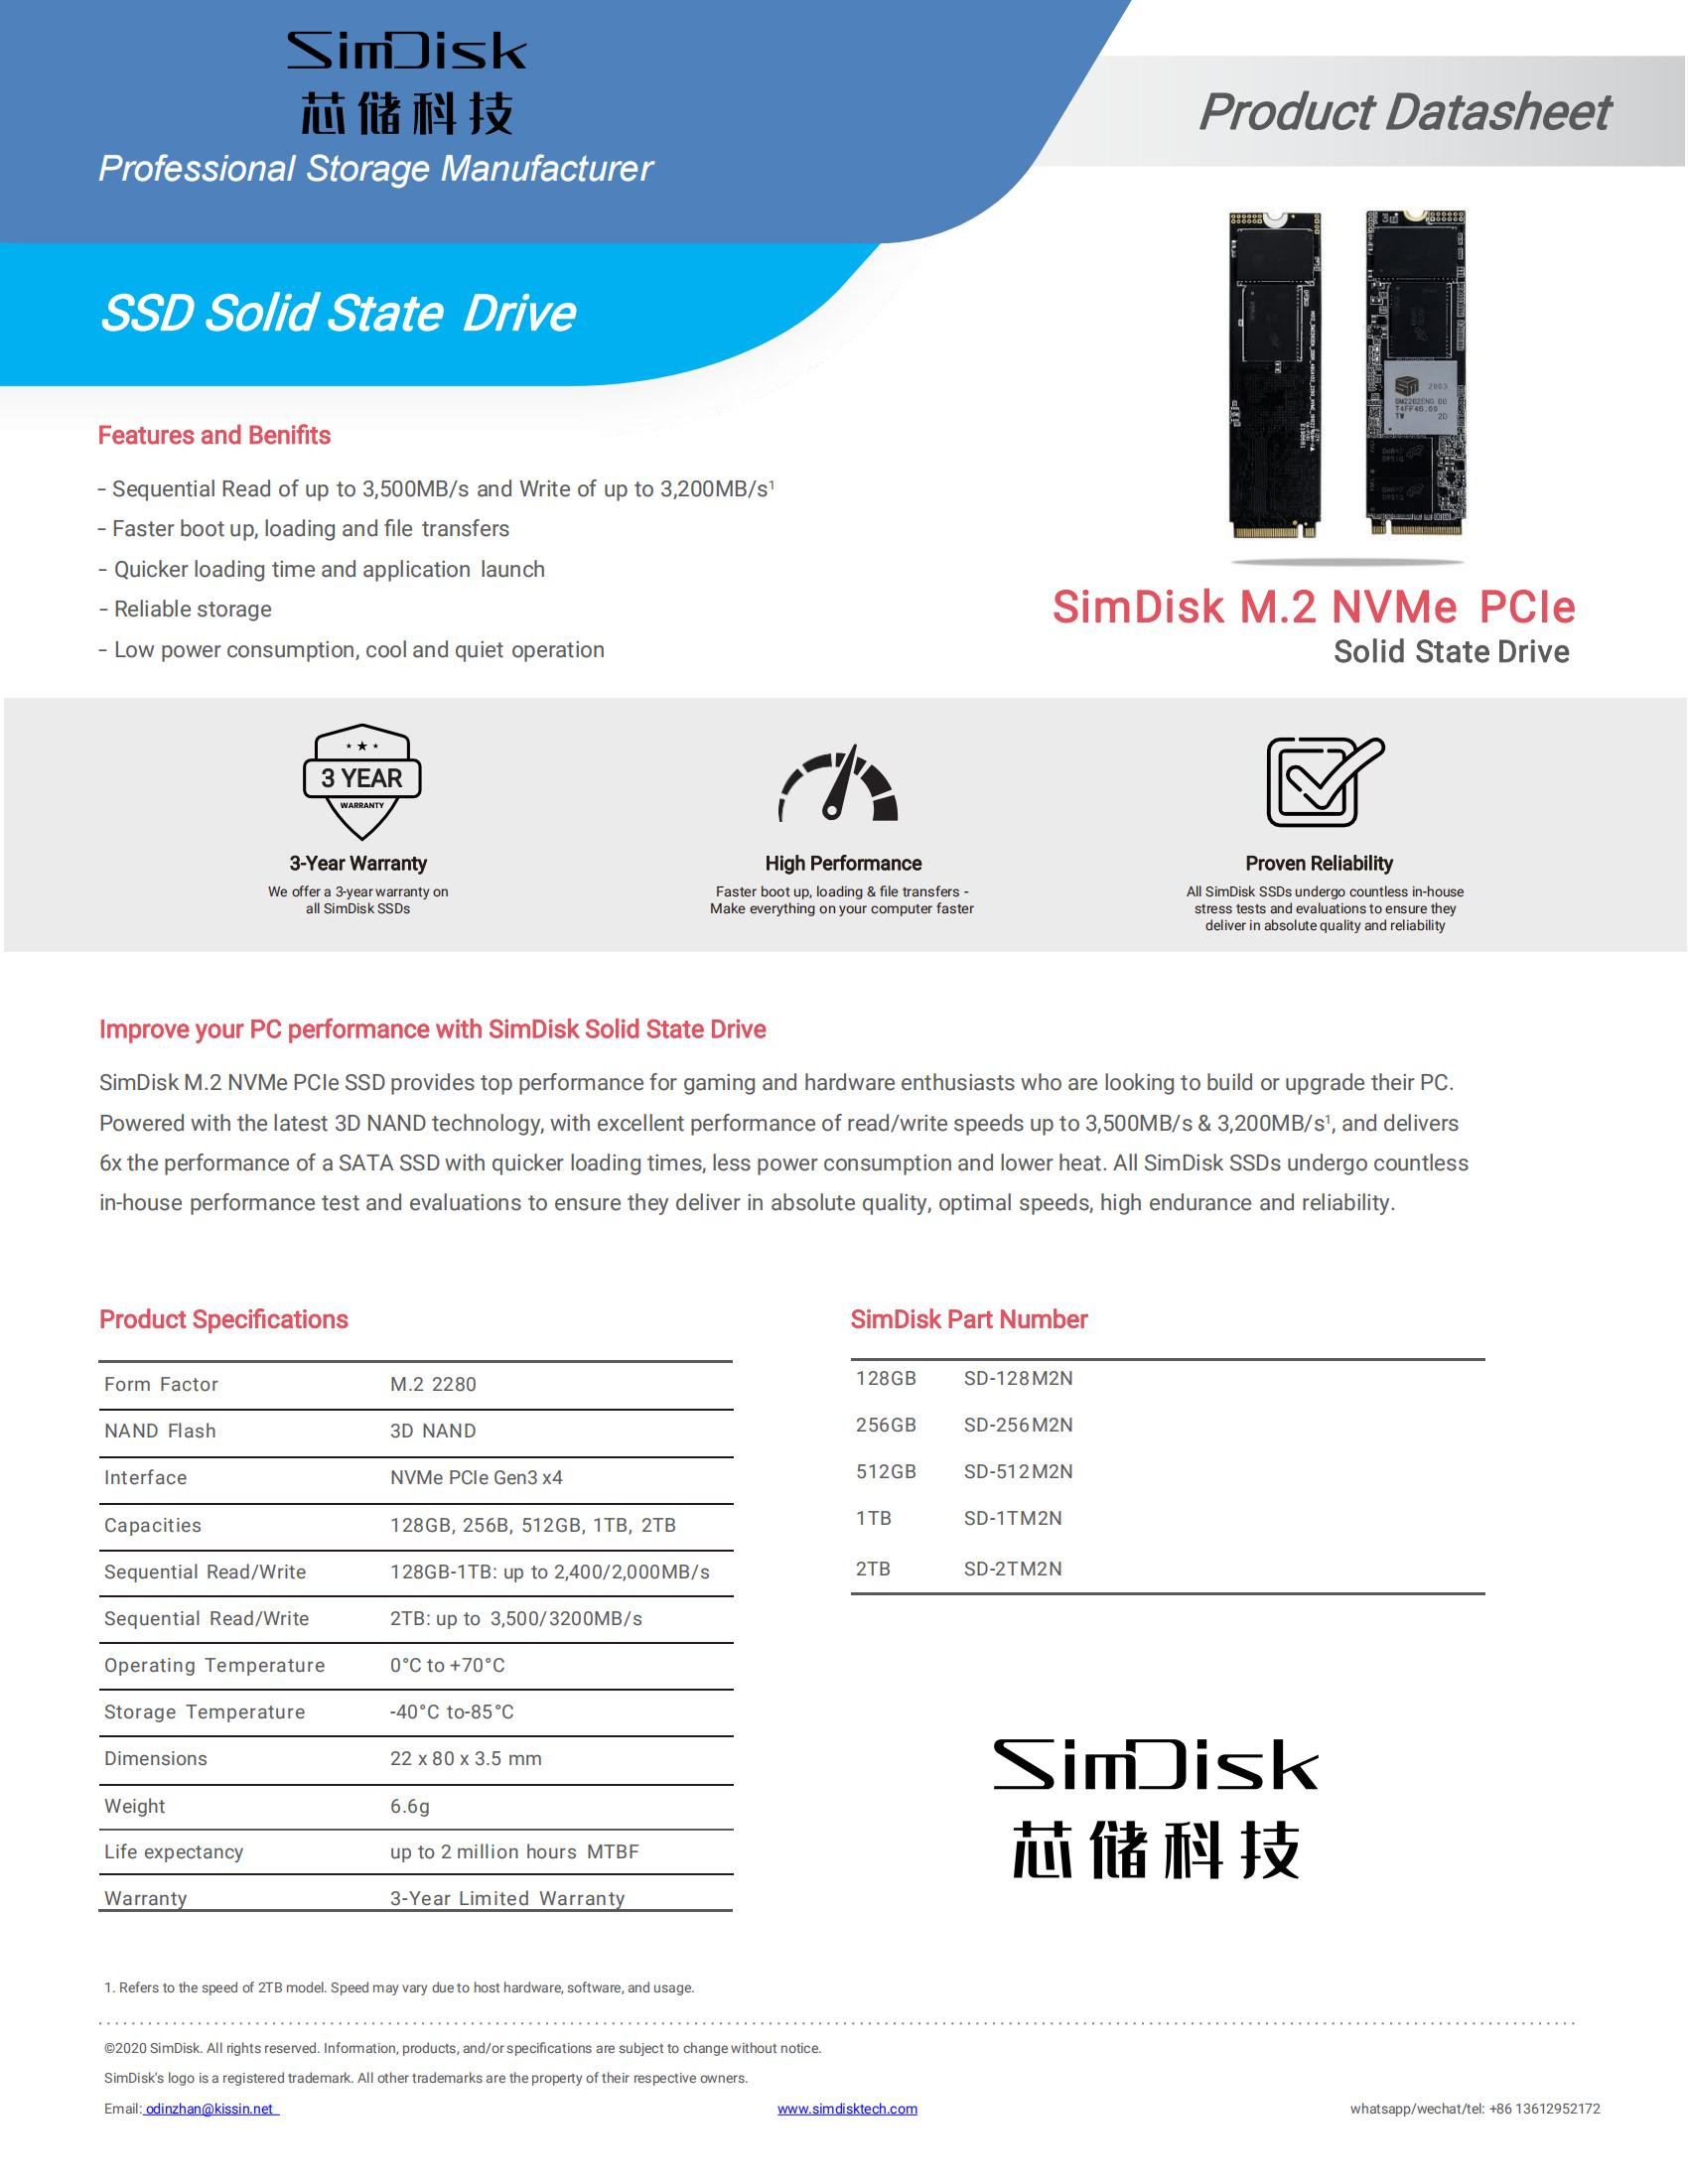 SimDisk M.2 NVME SSD データシート_00